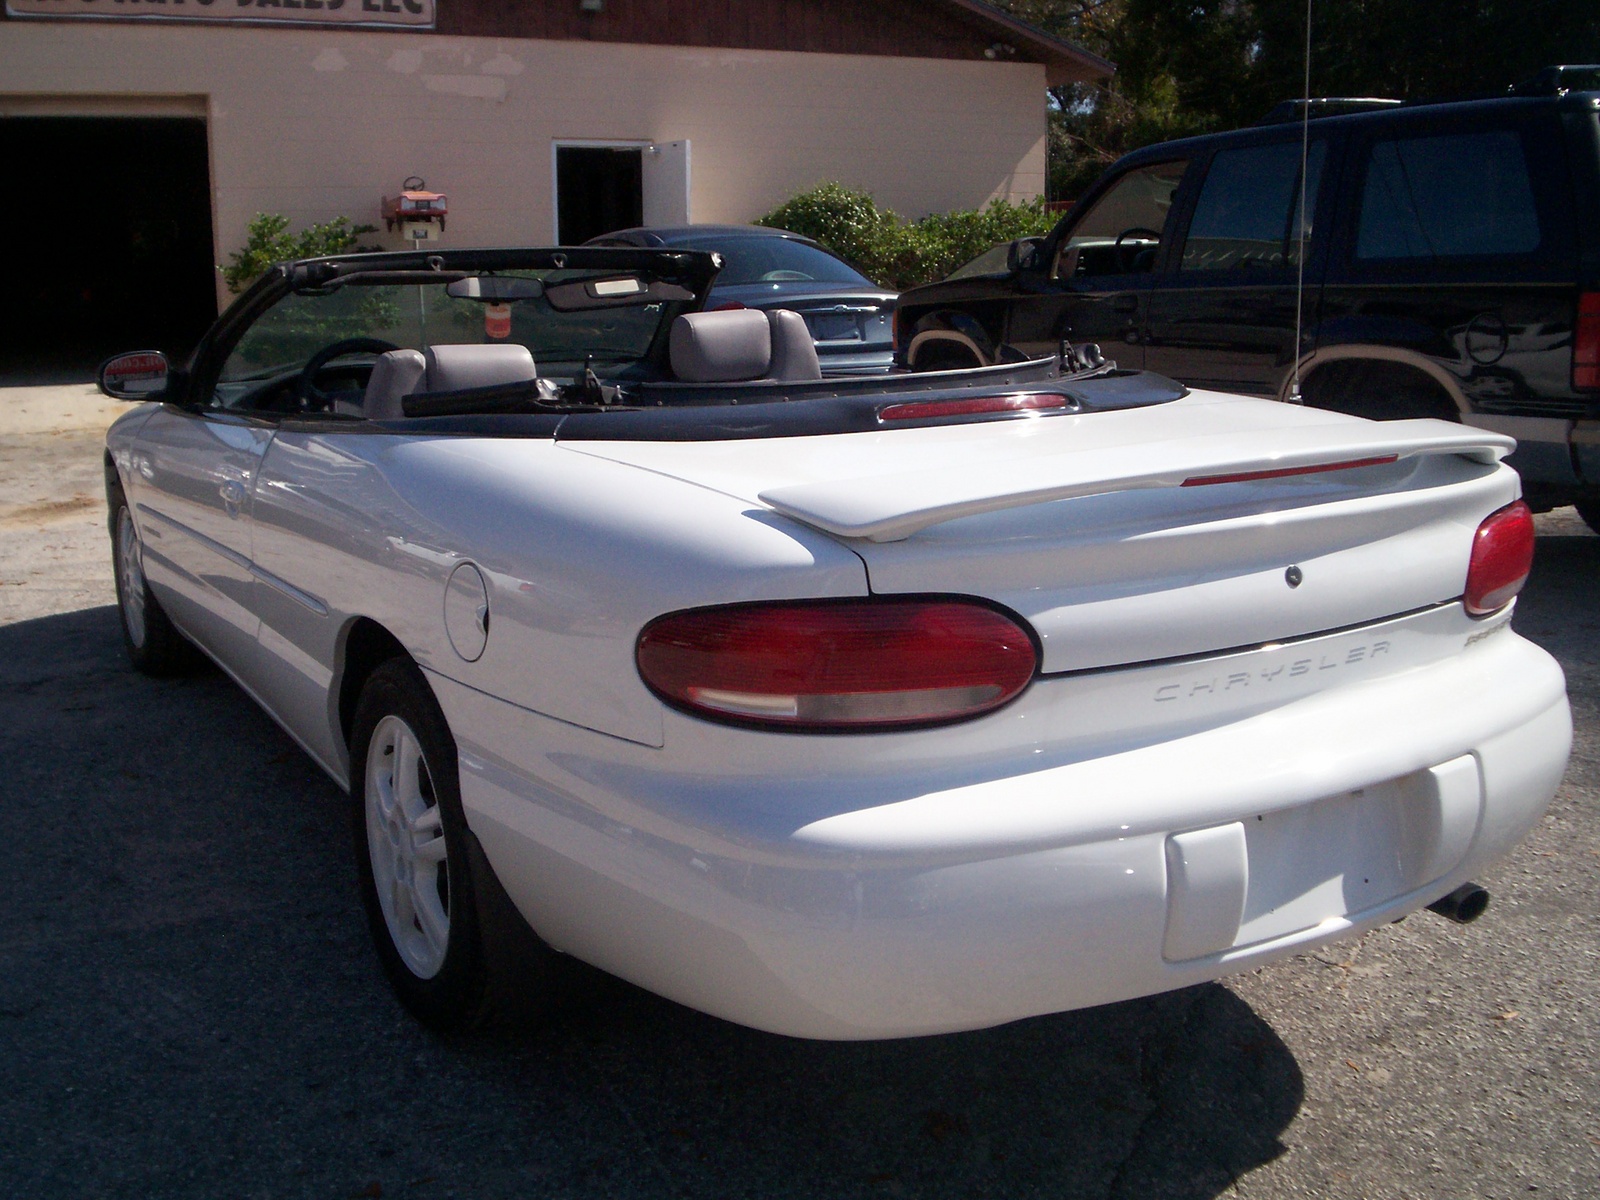 2000 Chrysler sebring convertible grille #4